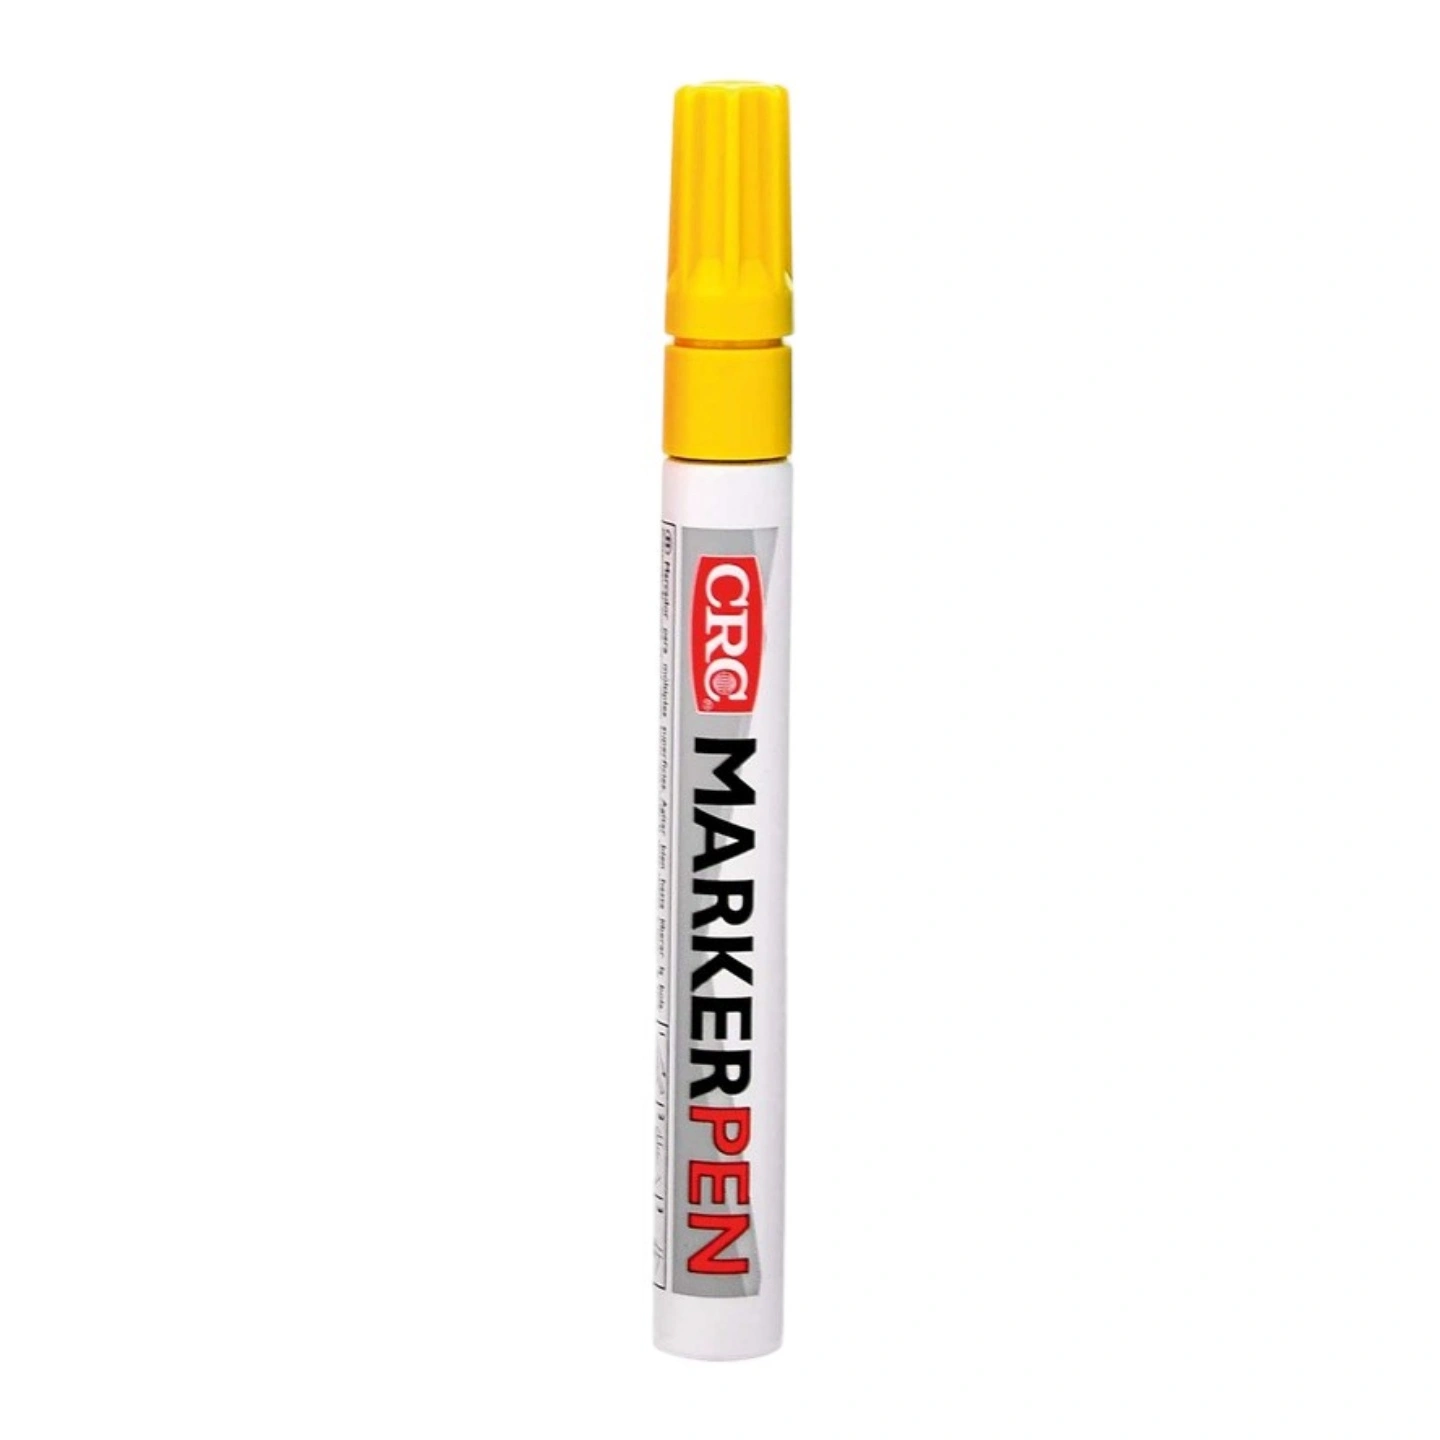 CRC Marker Pen - Merketusj Gul